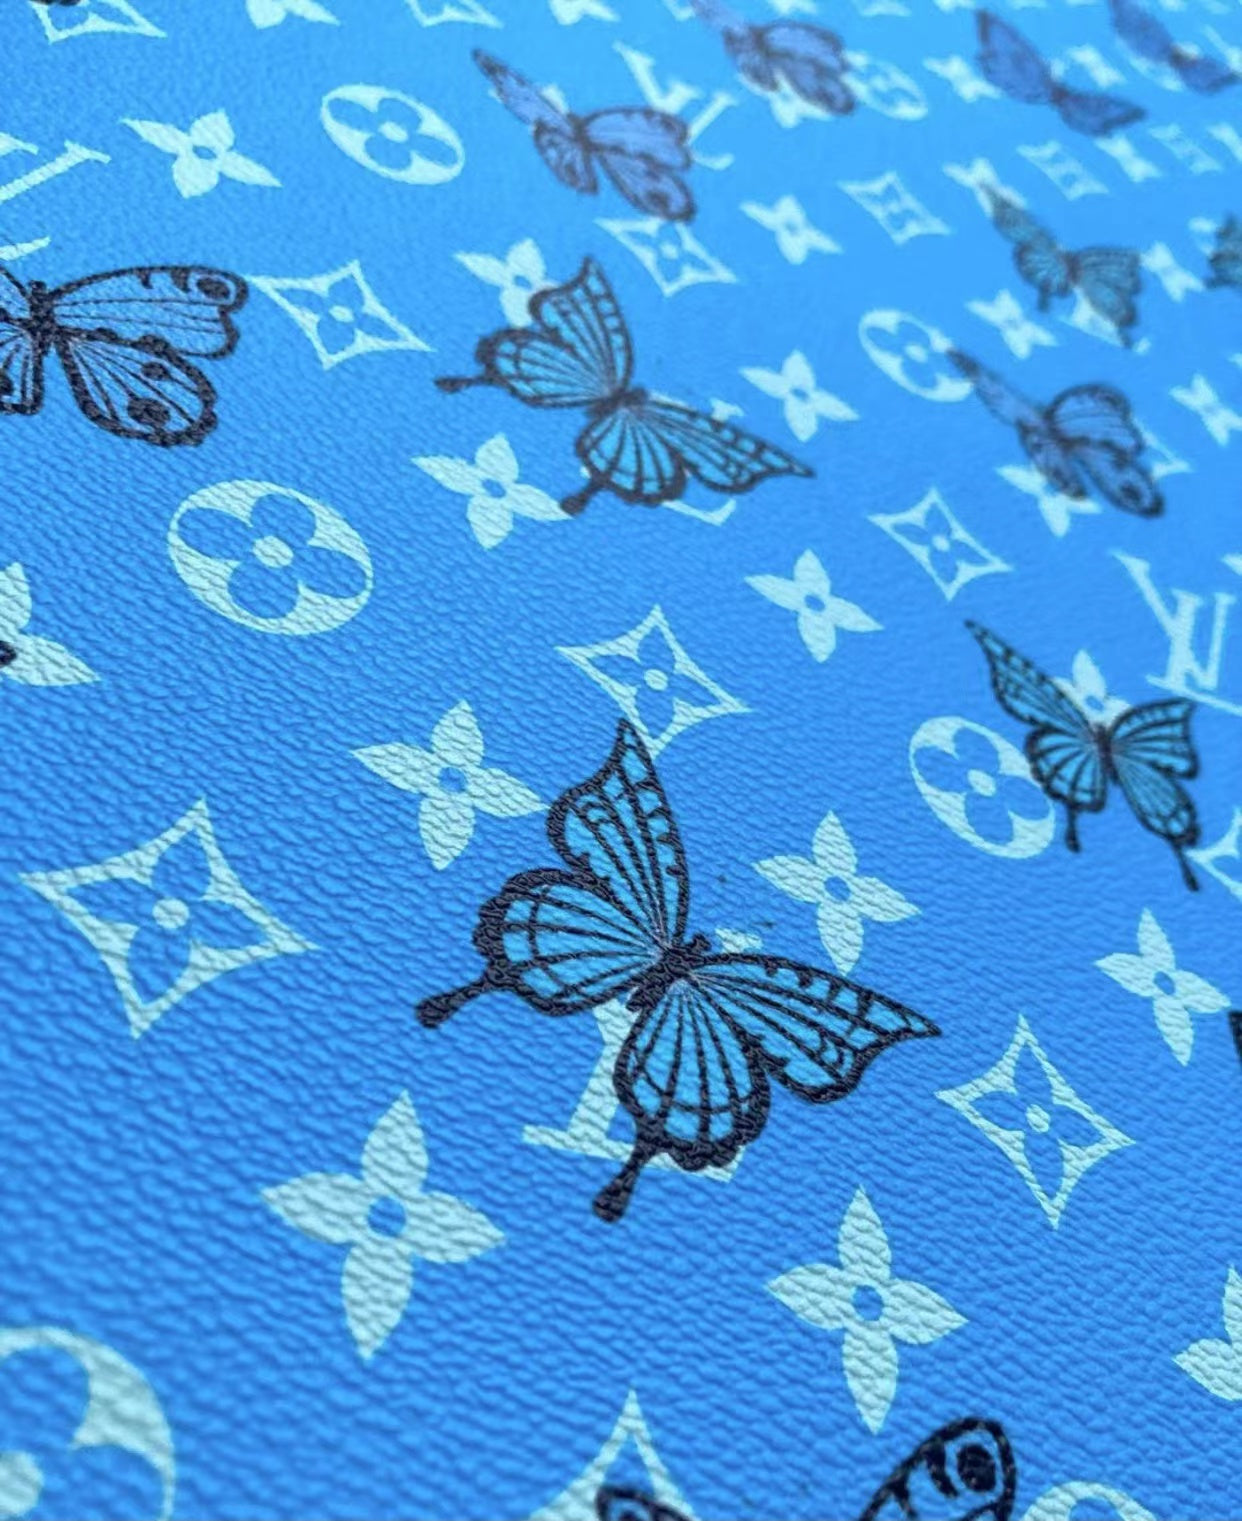 Blue Butterfyl Designer Custom LV Leather for Sneakers Crafts Upholstery